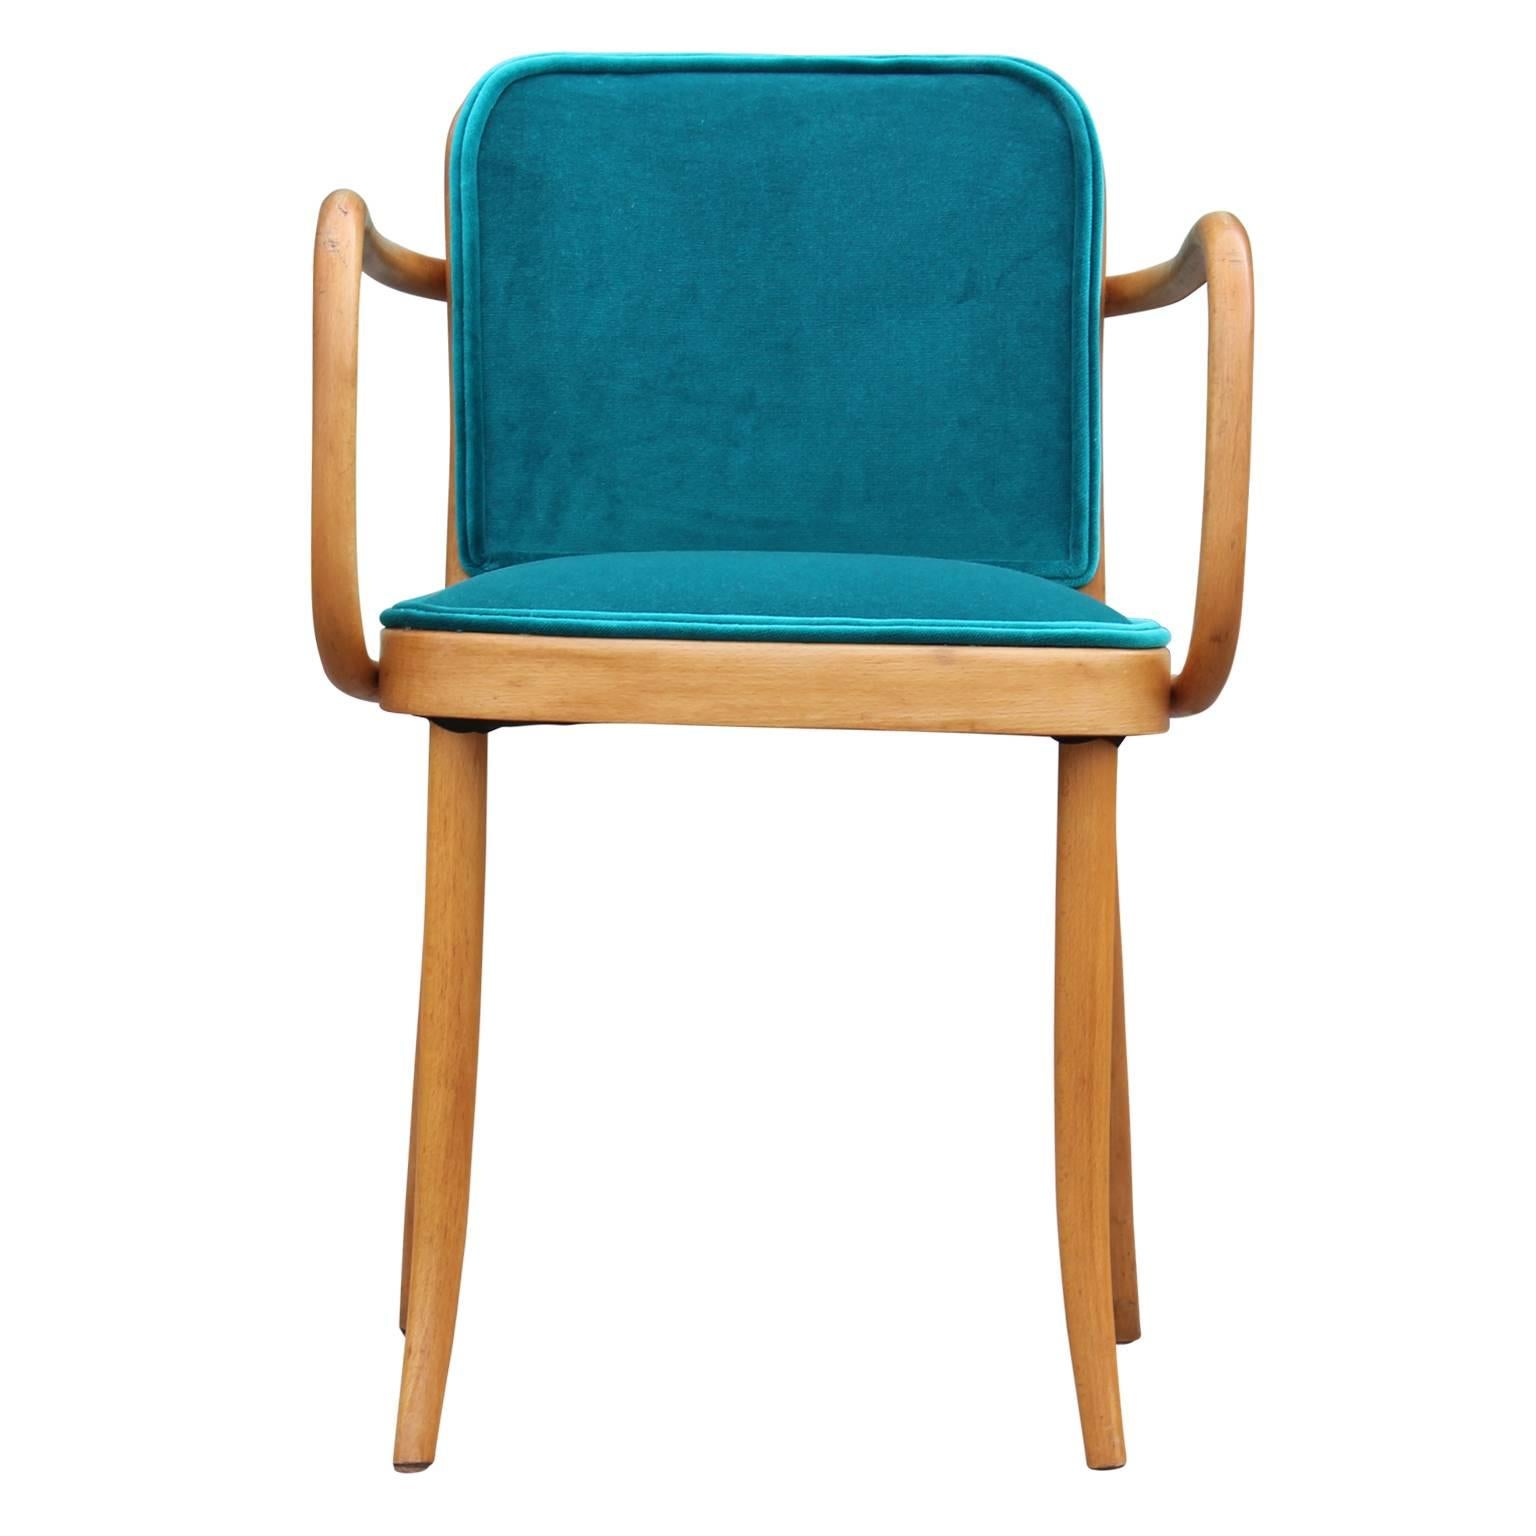 Mid-20th Century Modern Josef Hoffmann Thonet No 811 Turquoise Velvet Dining Chair